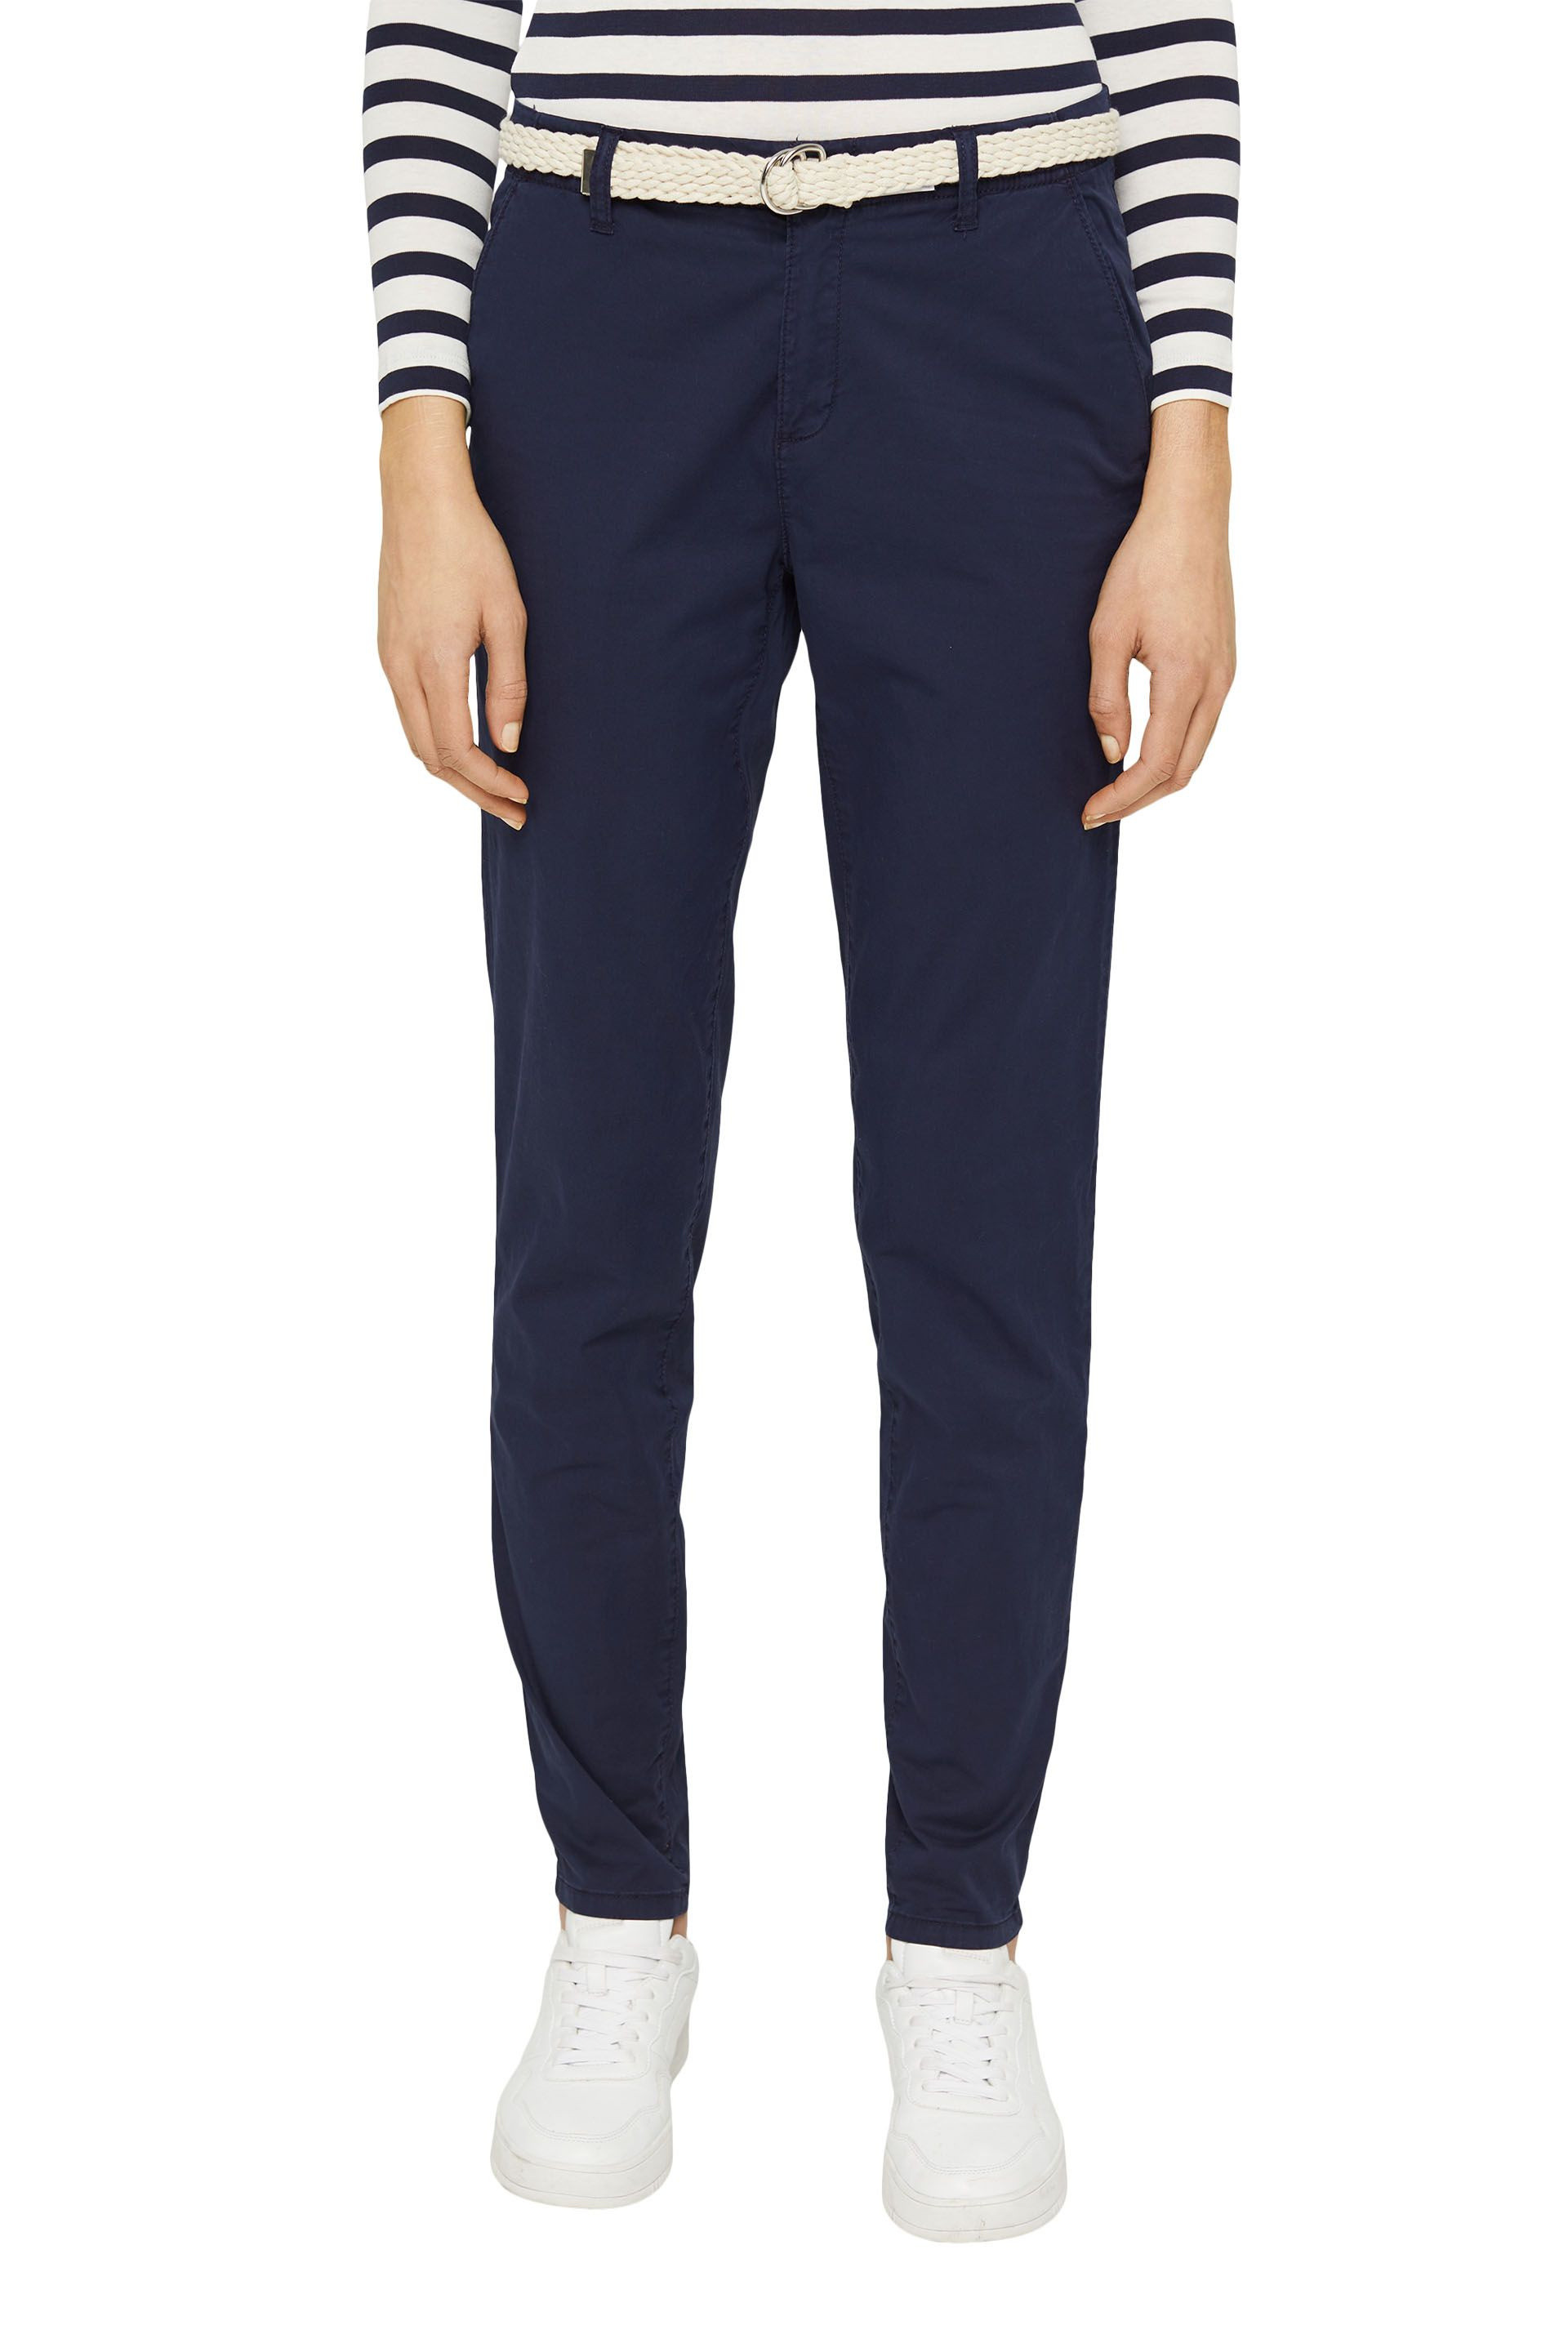 Pantaloni chino con cintura intrecciata, Blu, large image number 1